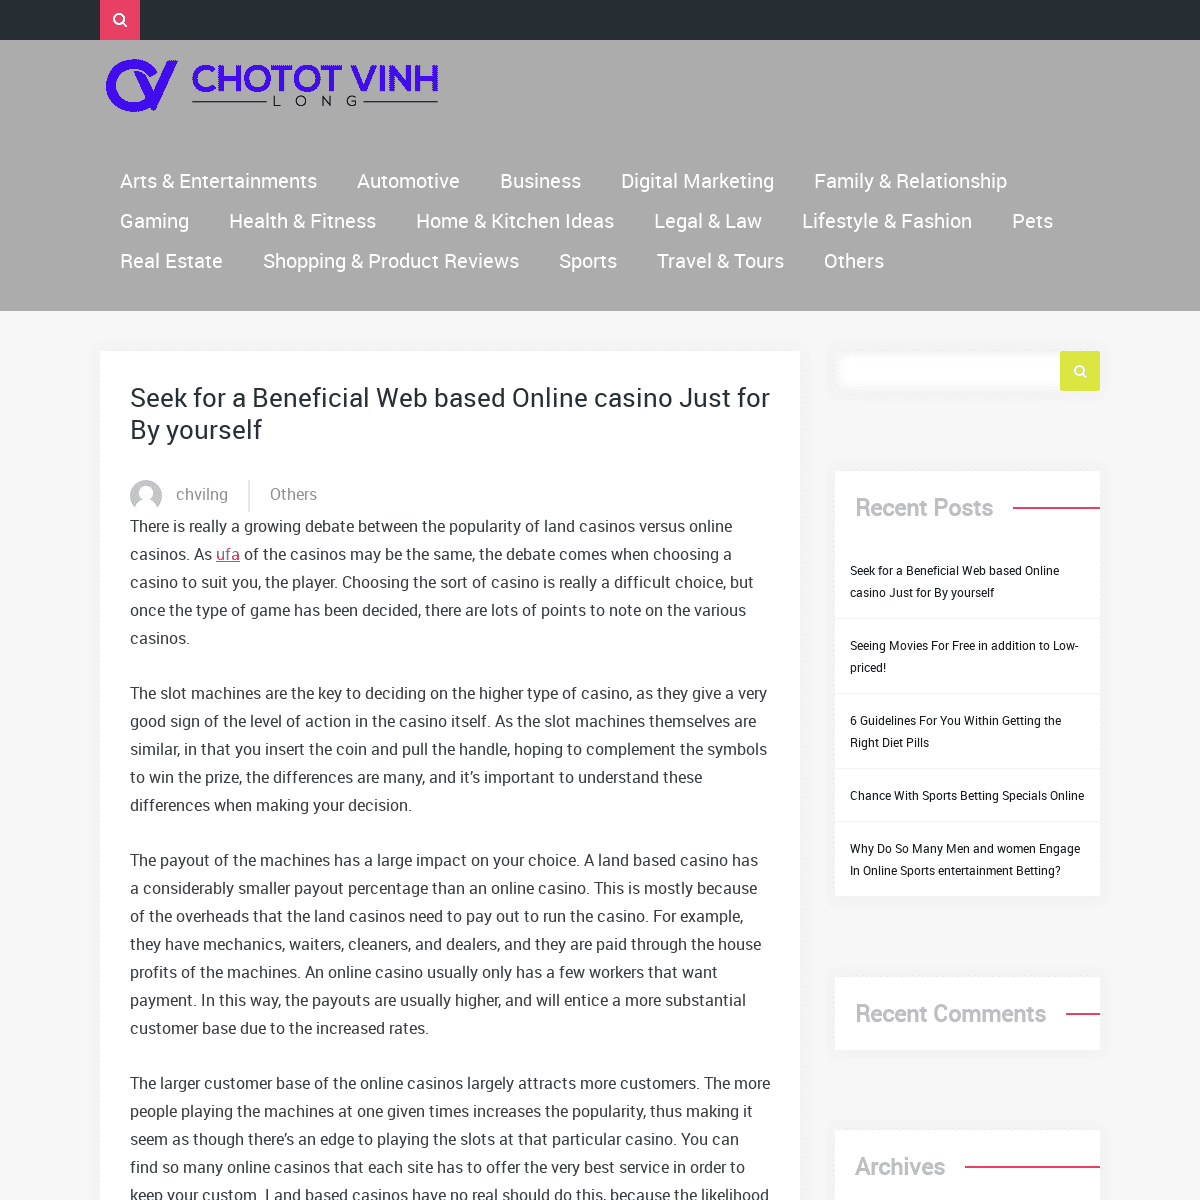 A complete backup of https://chototvinhlong.com